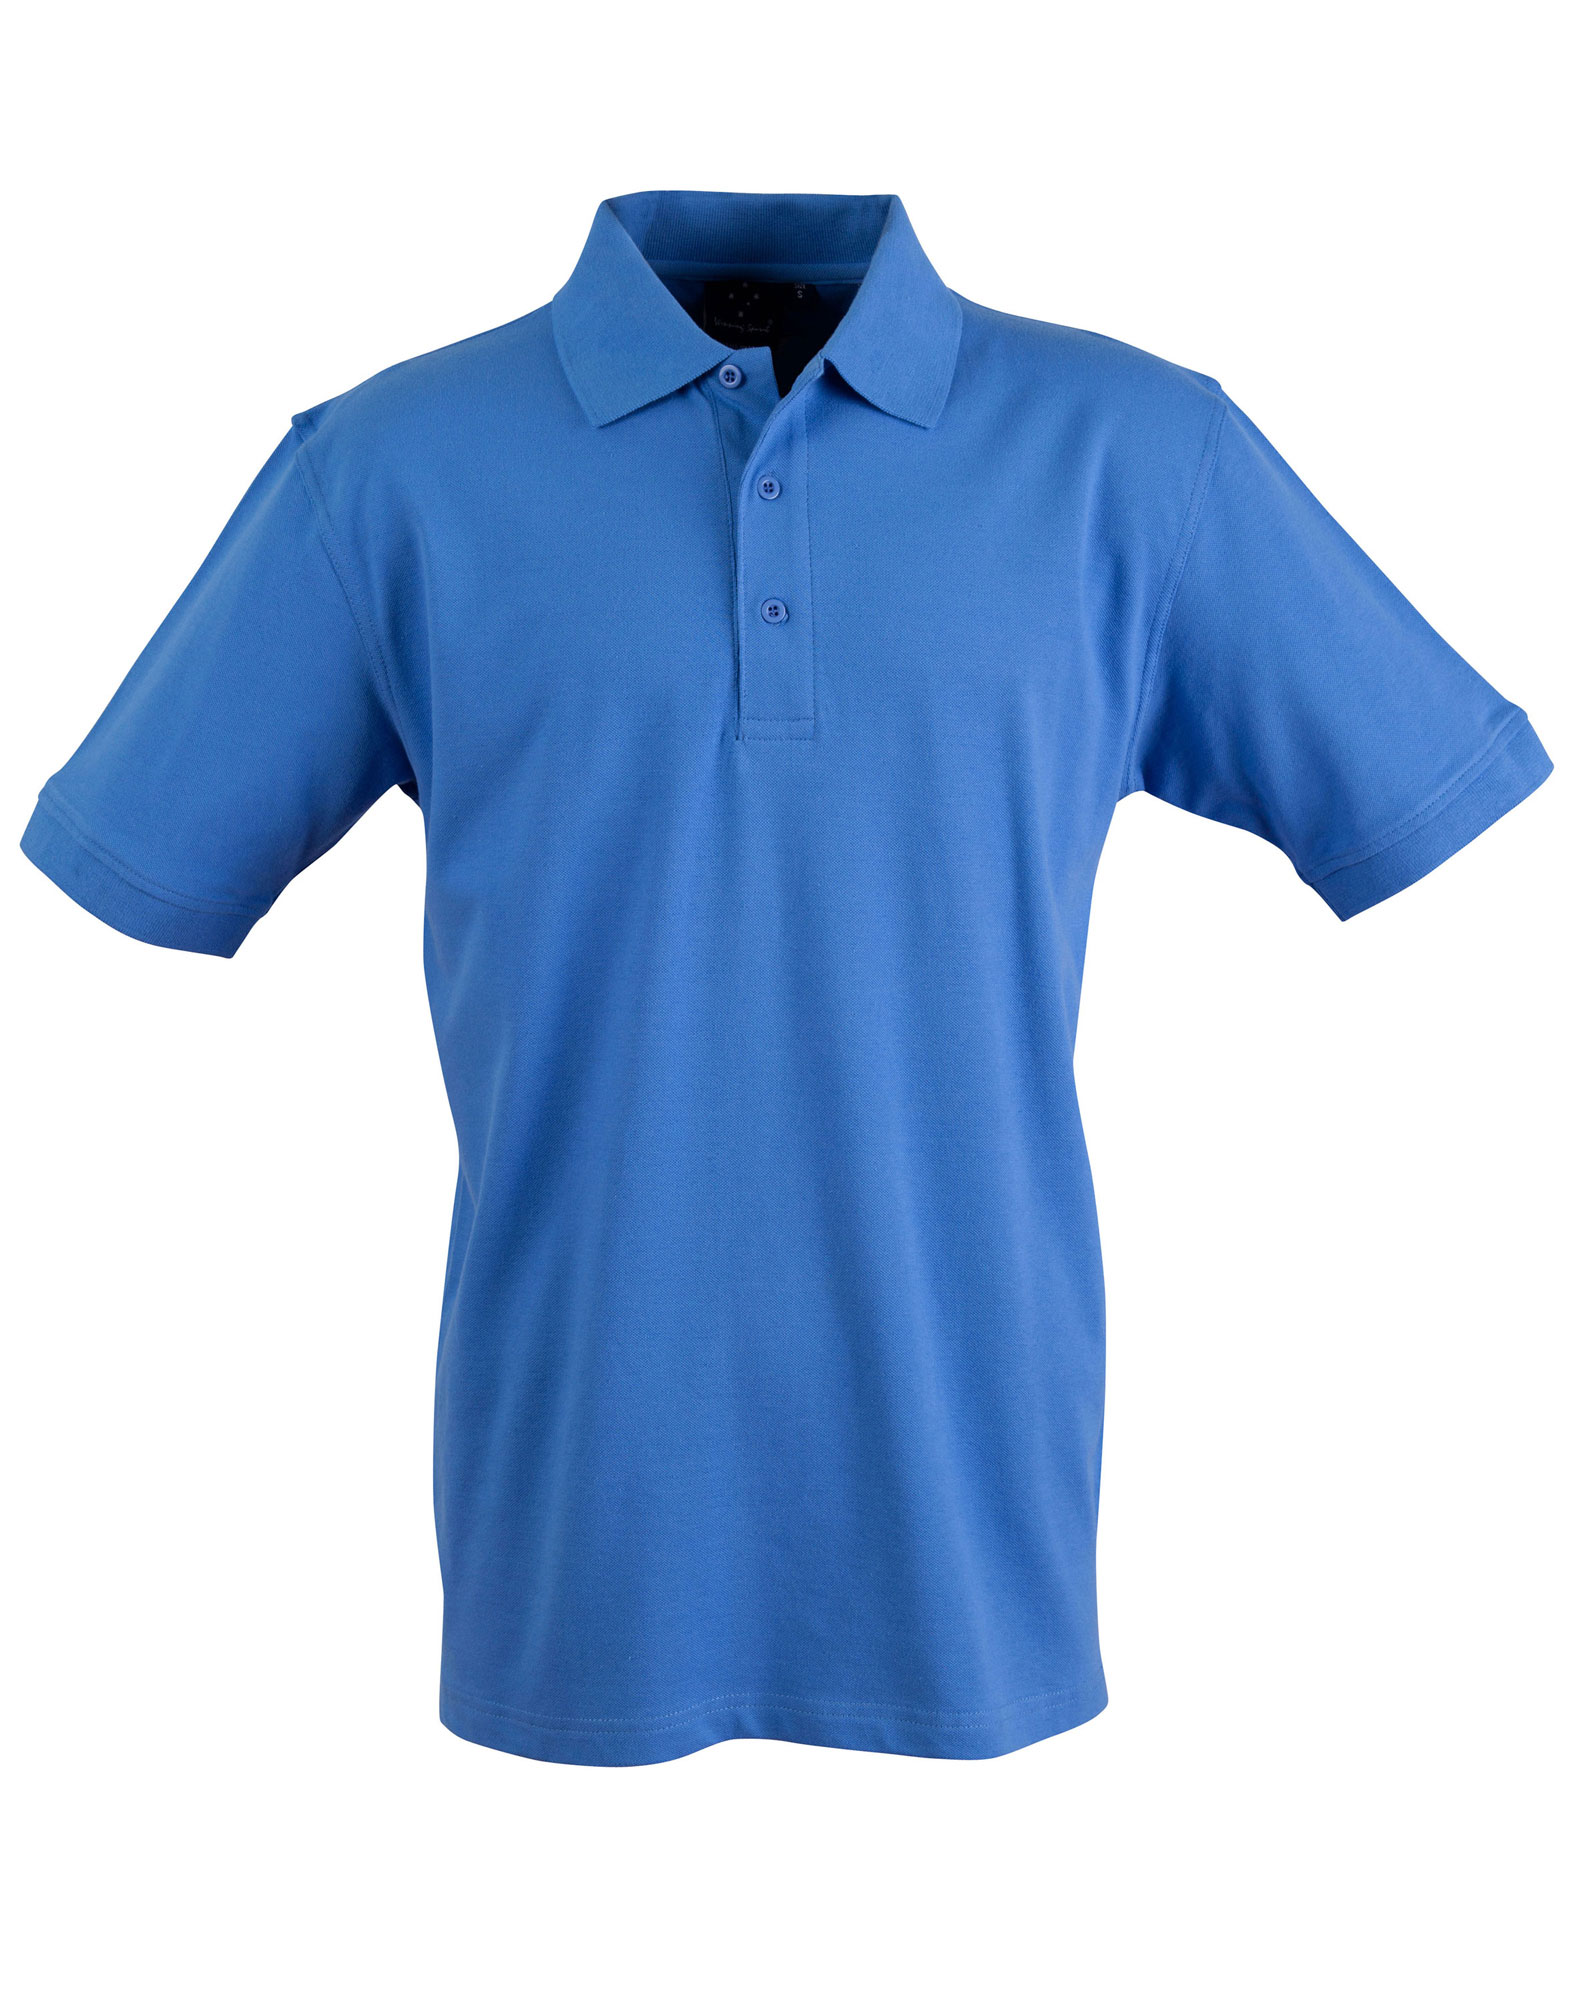 Custom Mens Black Darling Harbour Cotton Stretch Polo Shirts Online Perth Australia